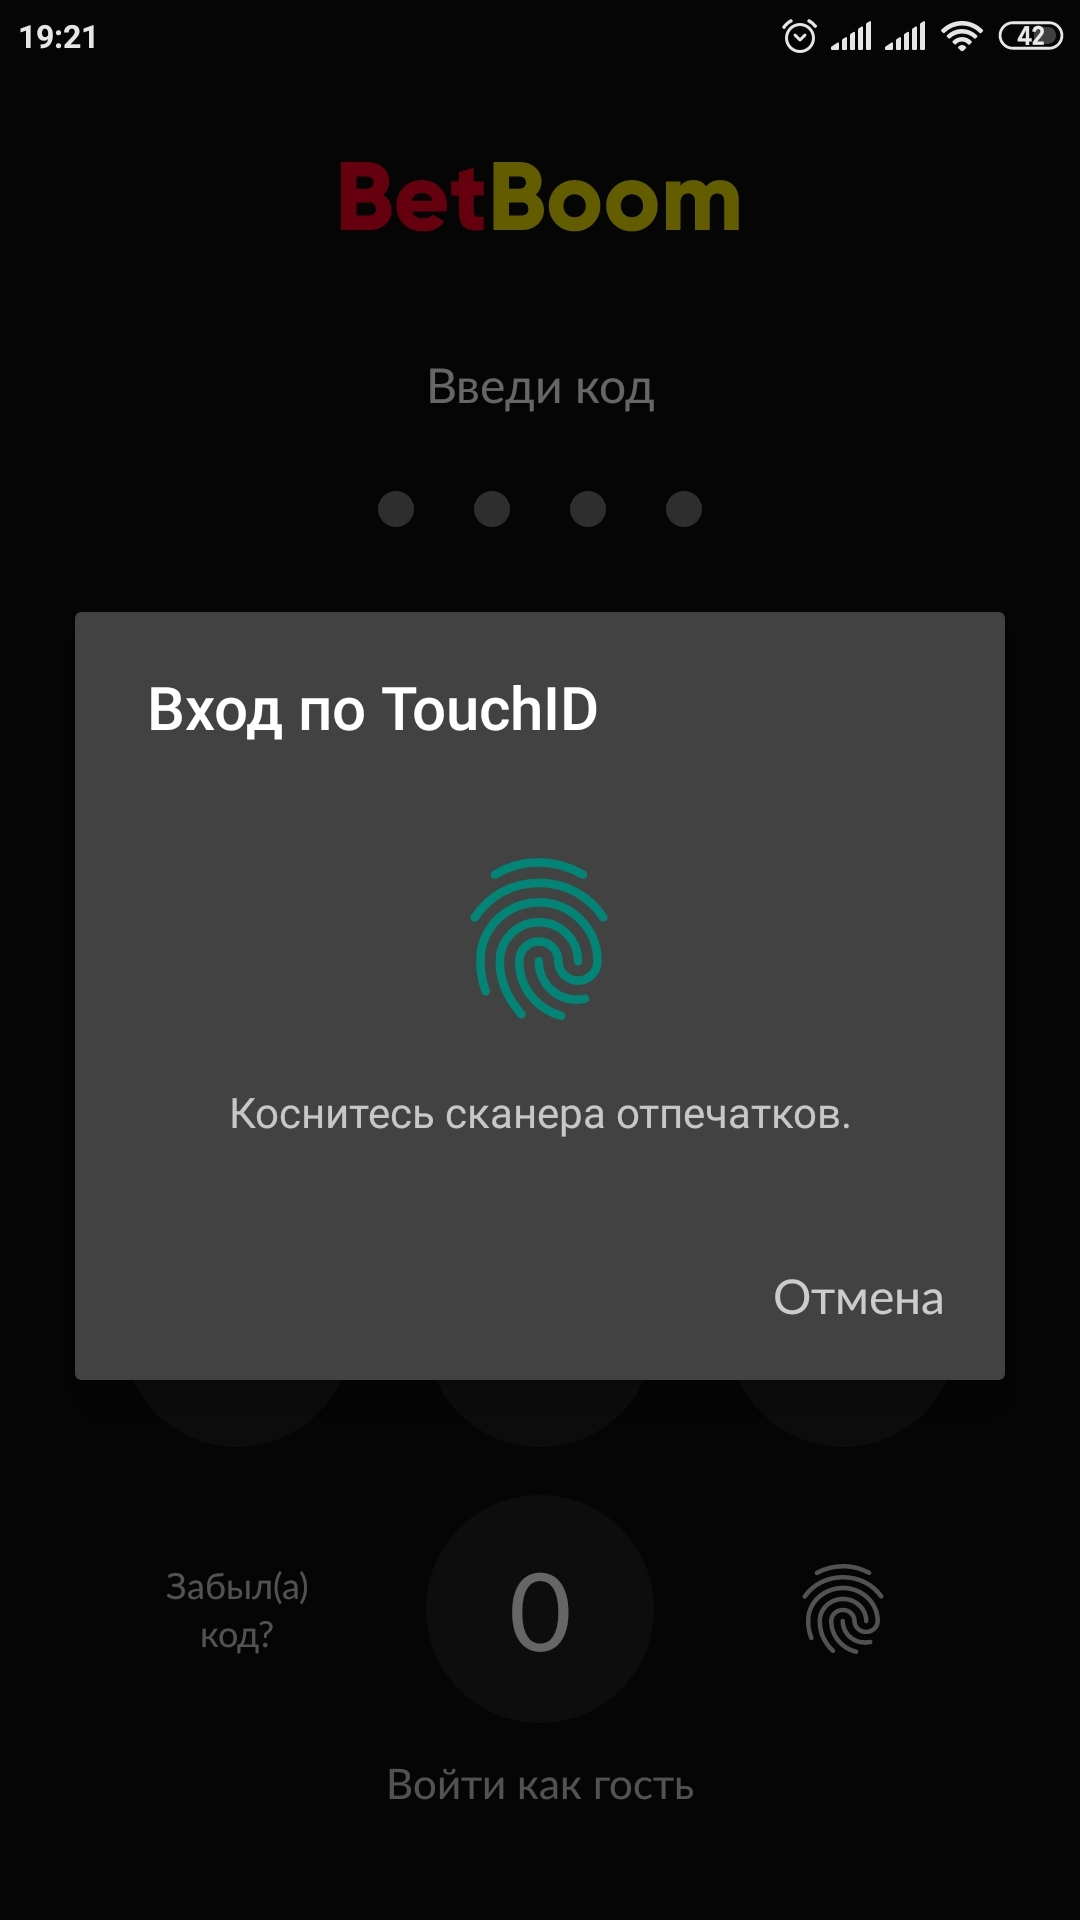 Аутентификация с помощью TouchID в BetBoom